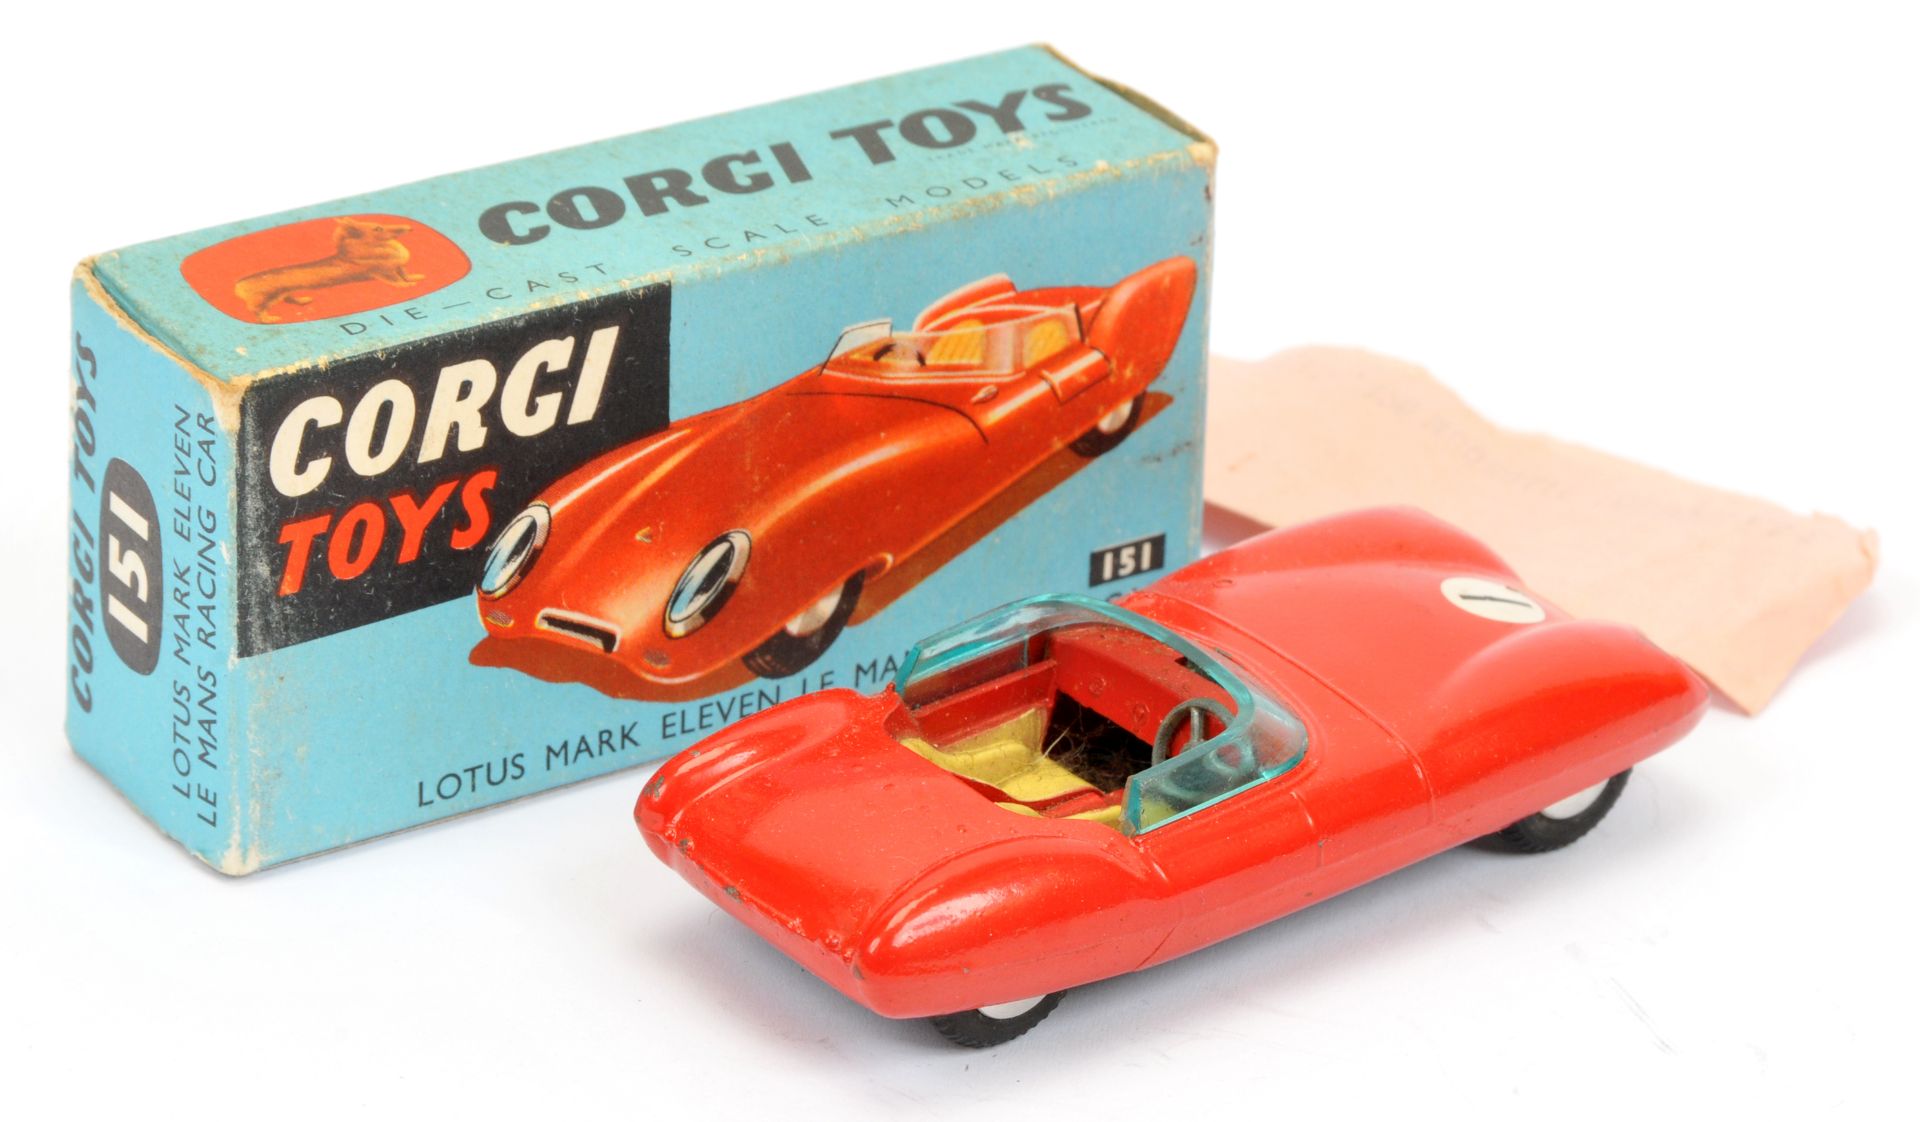 Corgi Toys 151 Lotus Mark 11 Le Mans Racing car - Red, cream seats, silver trim - Image 2 of 2